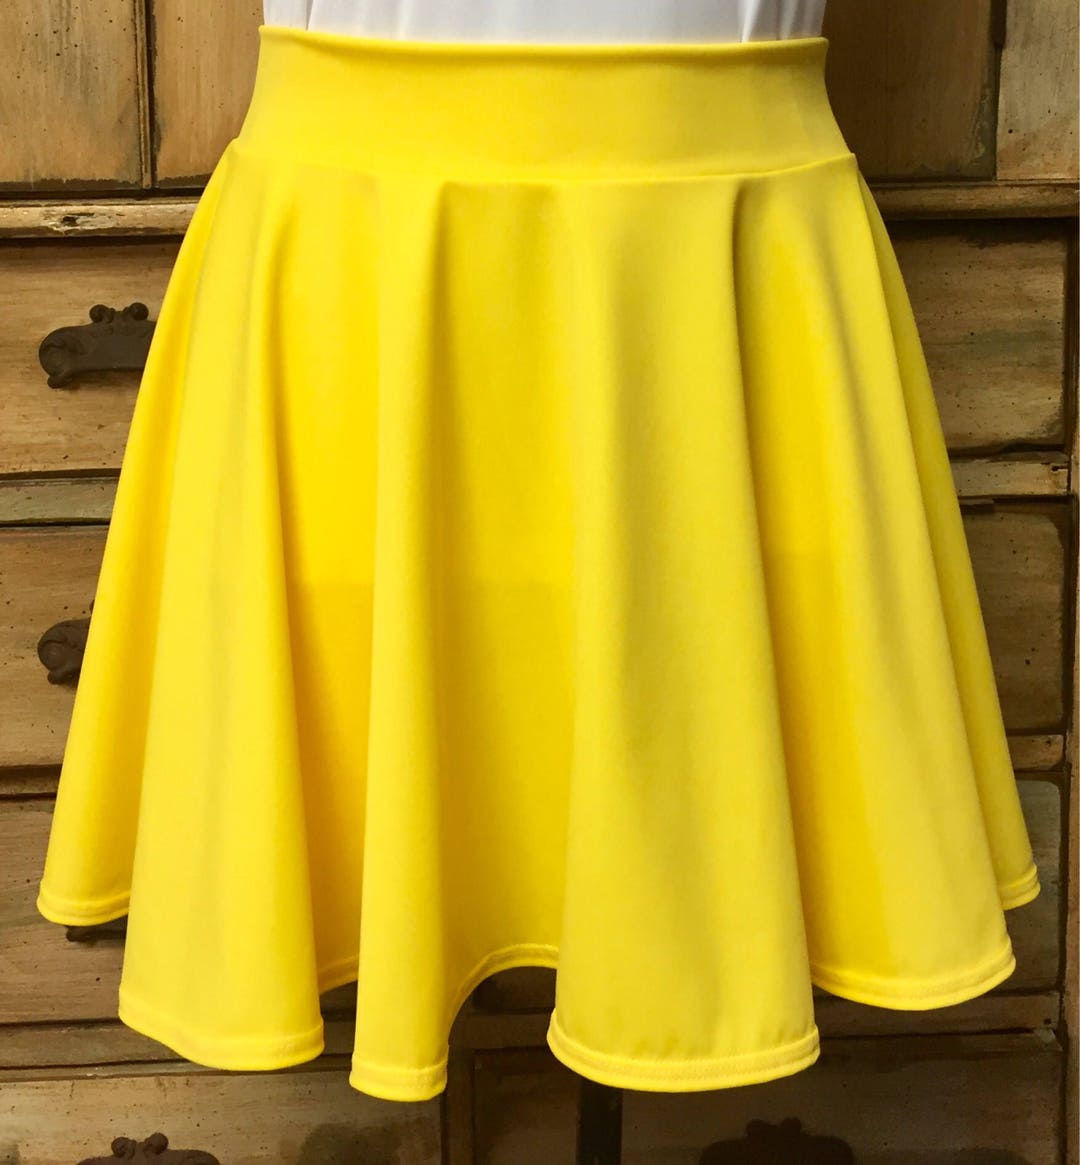 Lemon Yellow Spandex Running Skirt Muffin Top Free Snow White Princess ...